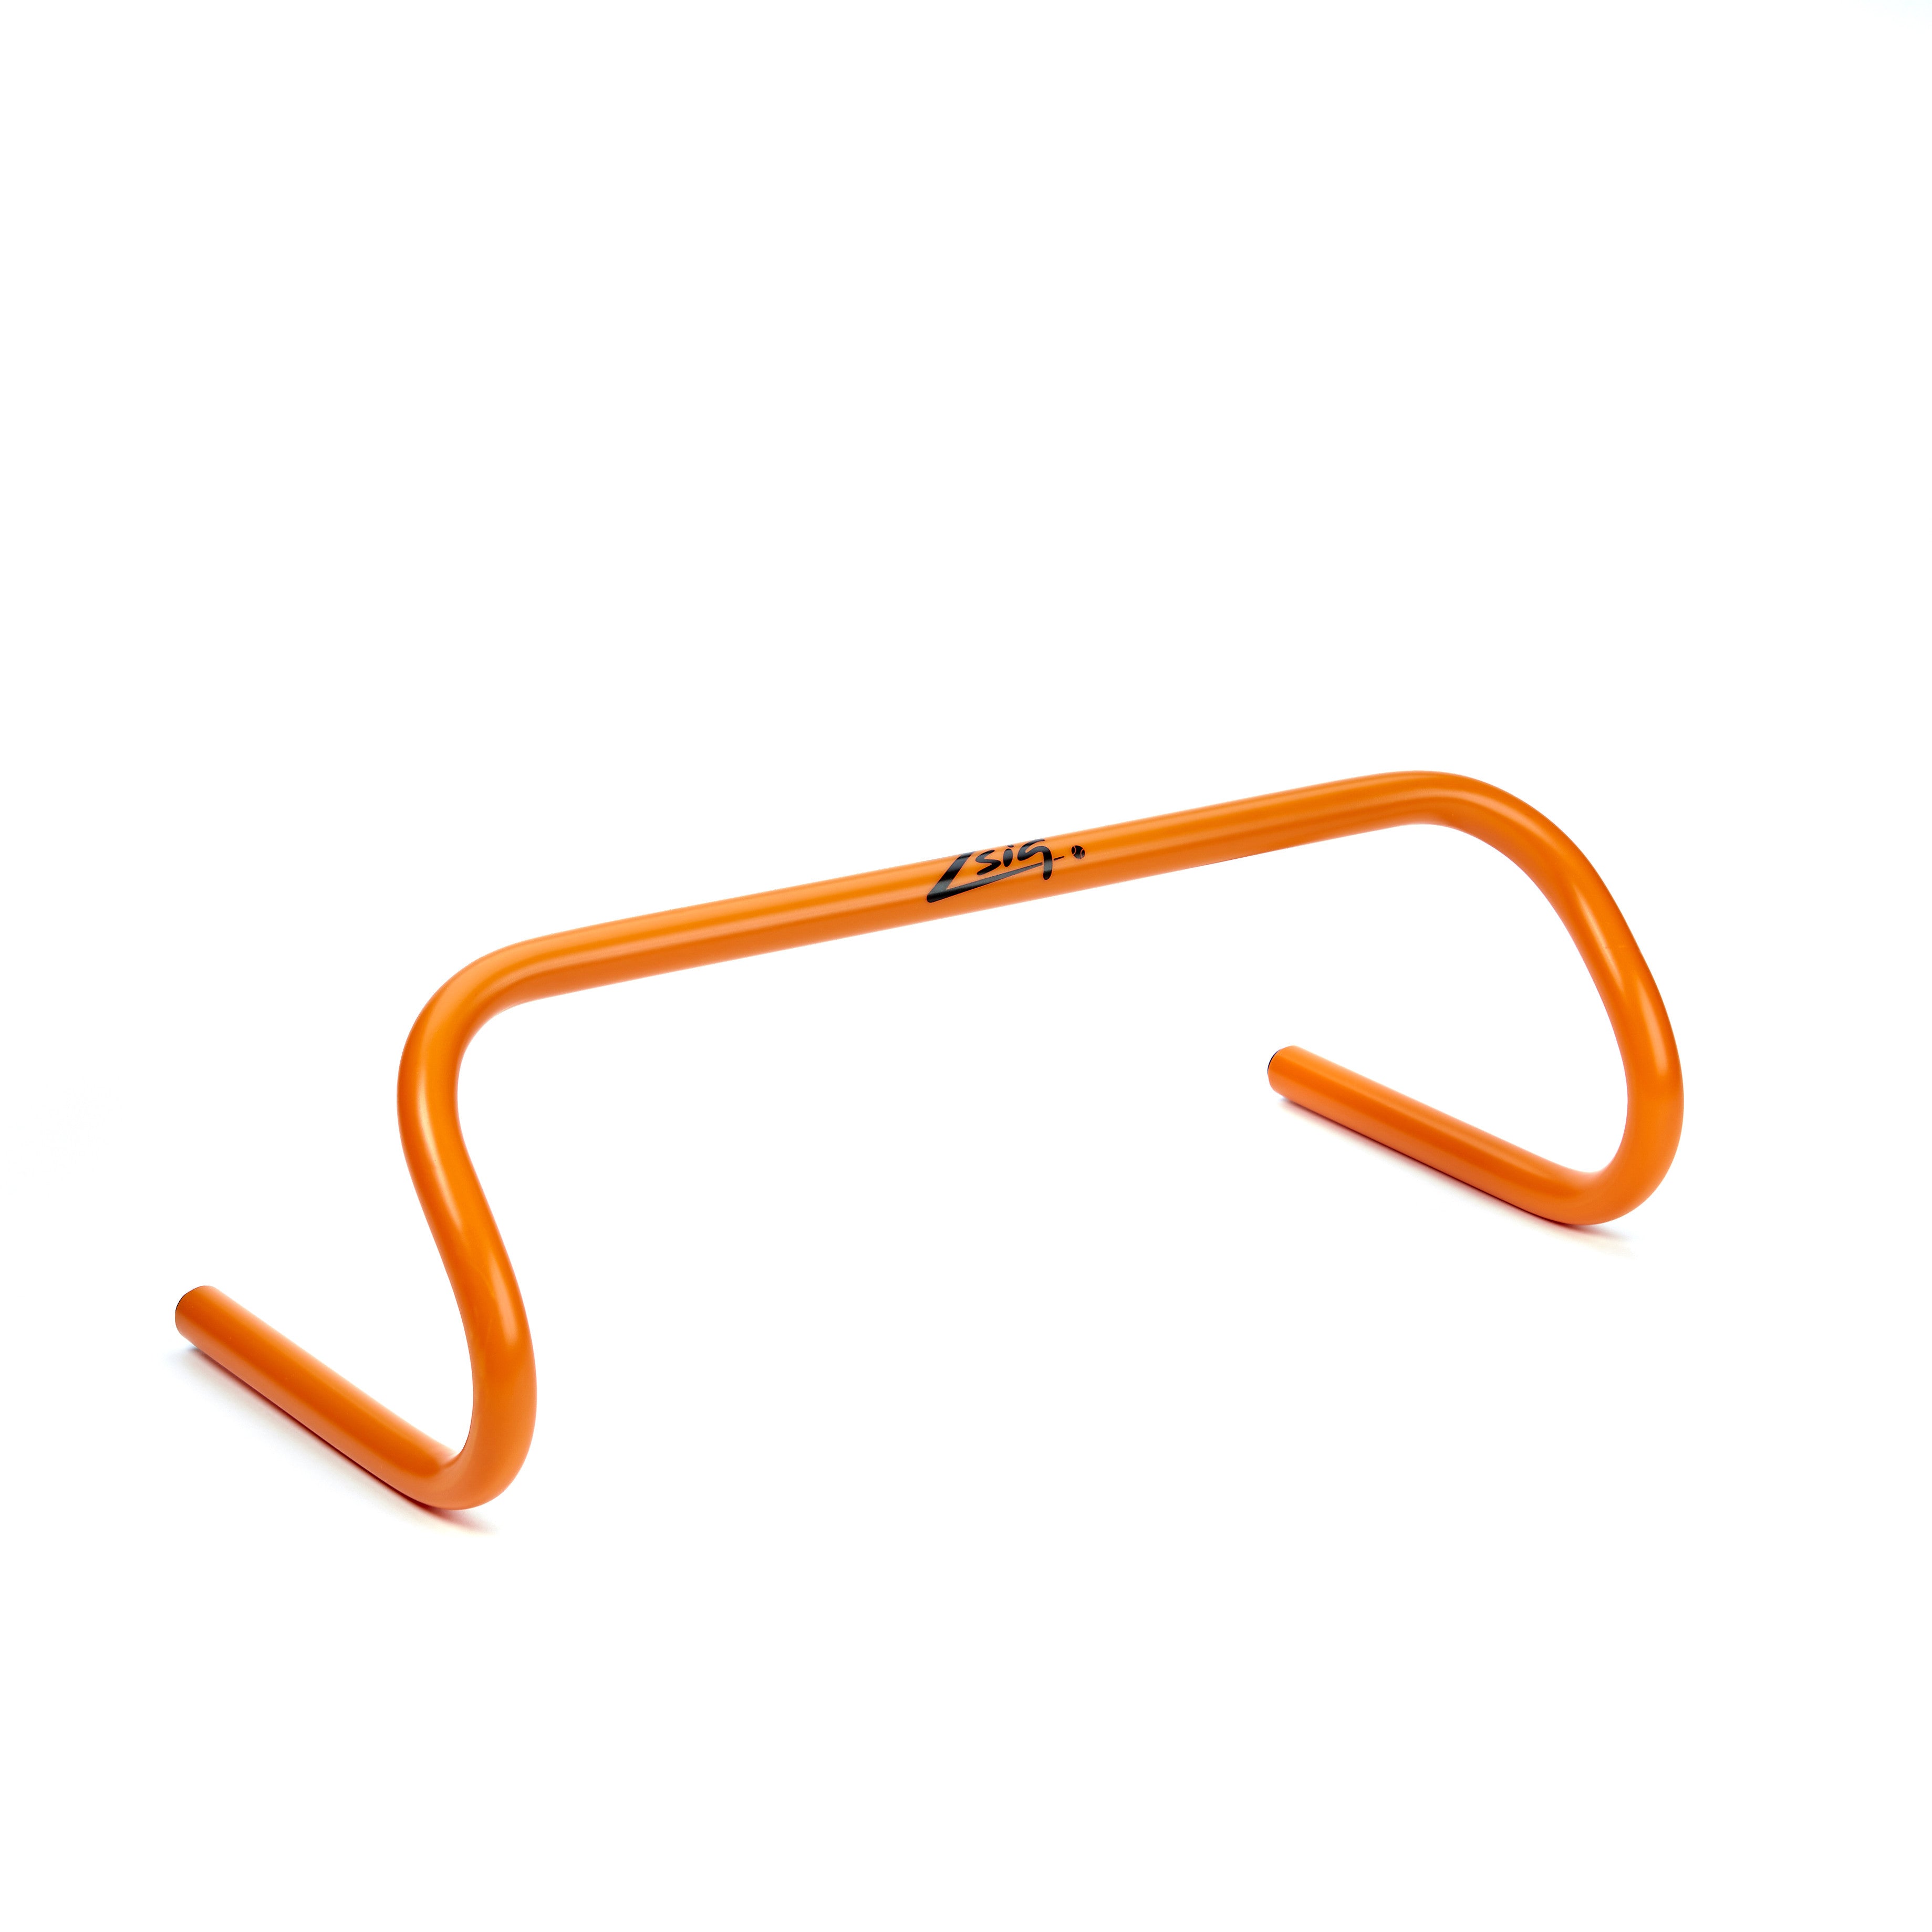 Mini hurdles in bright orange. 15cm height.